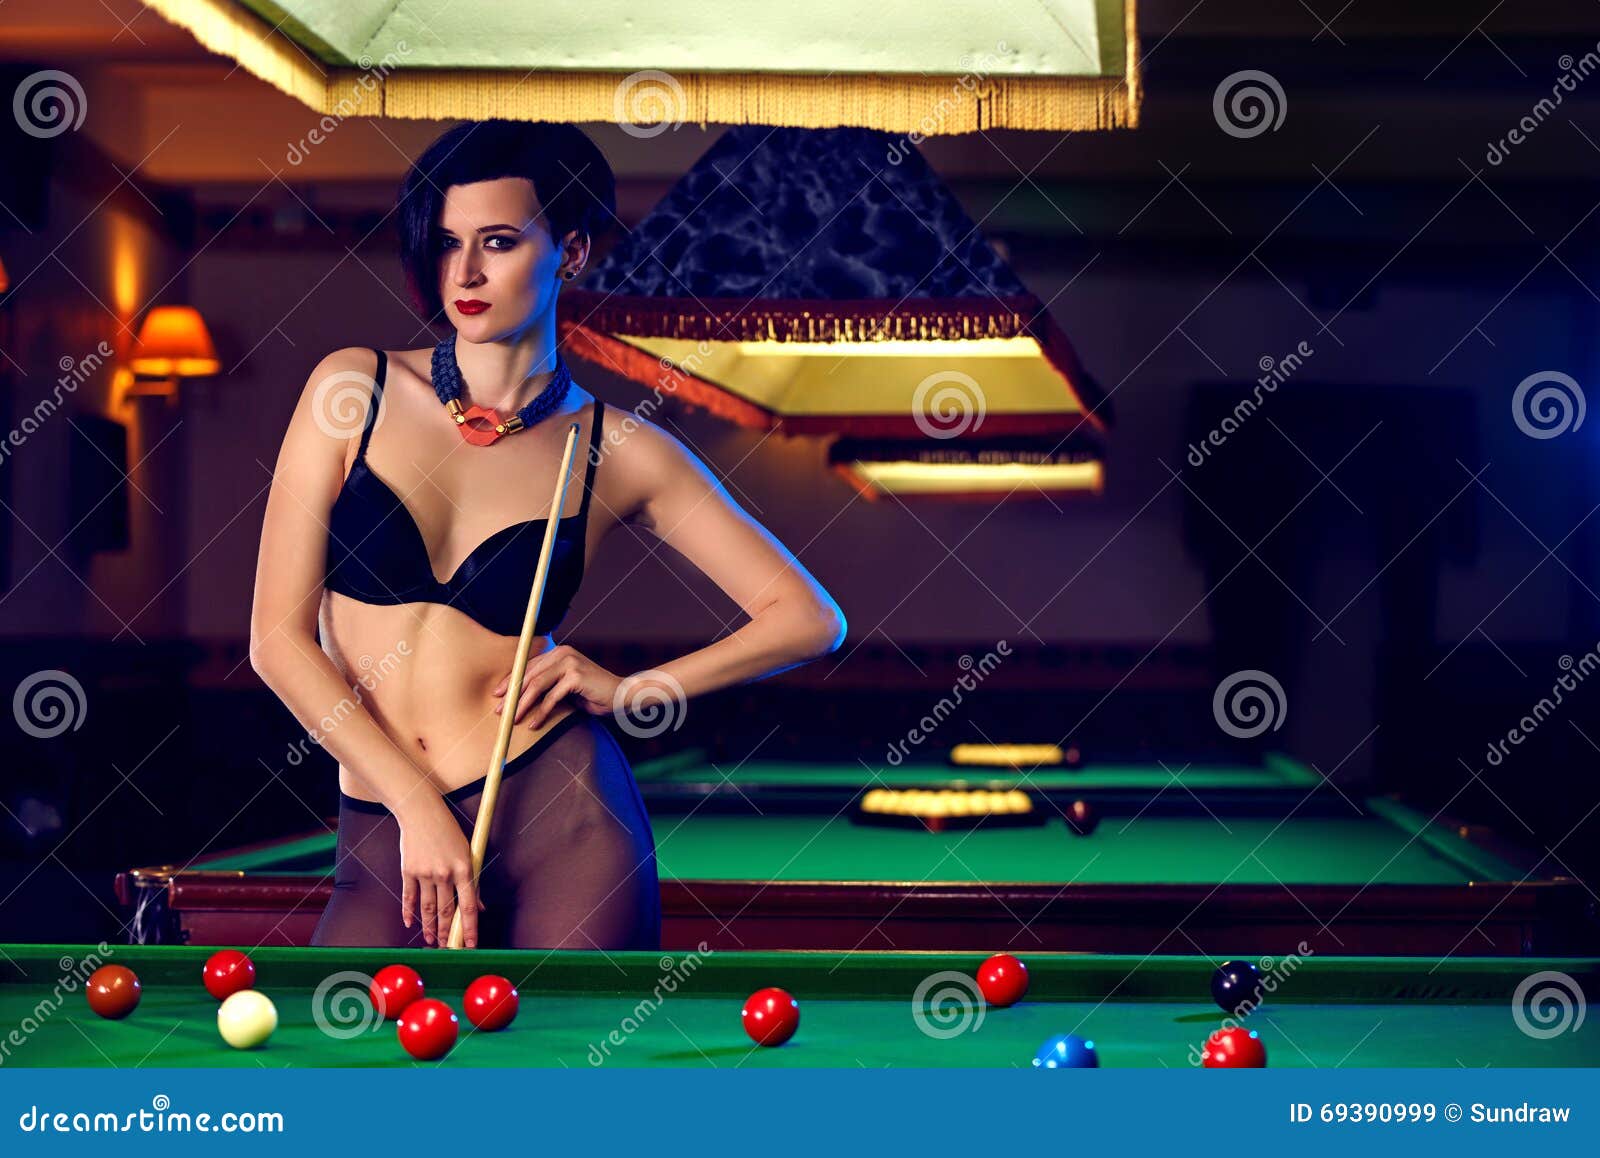 Garota sexy encontra-se na mesa de sinuca entre as bolas. jogo de